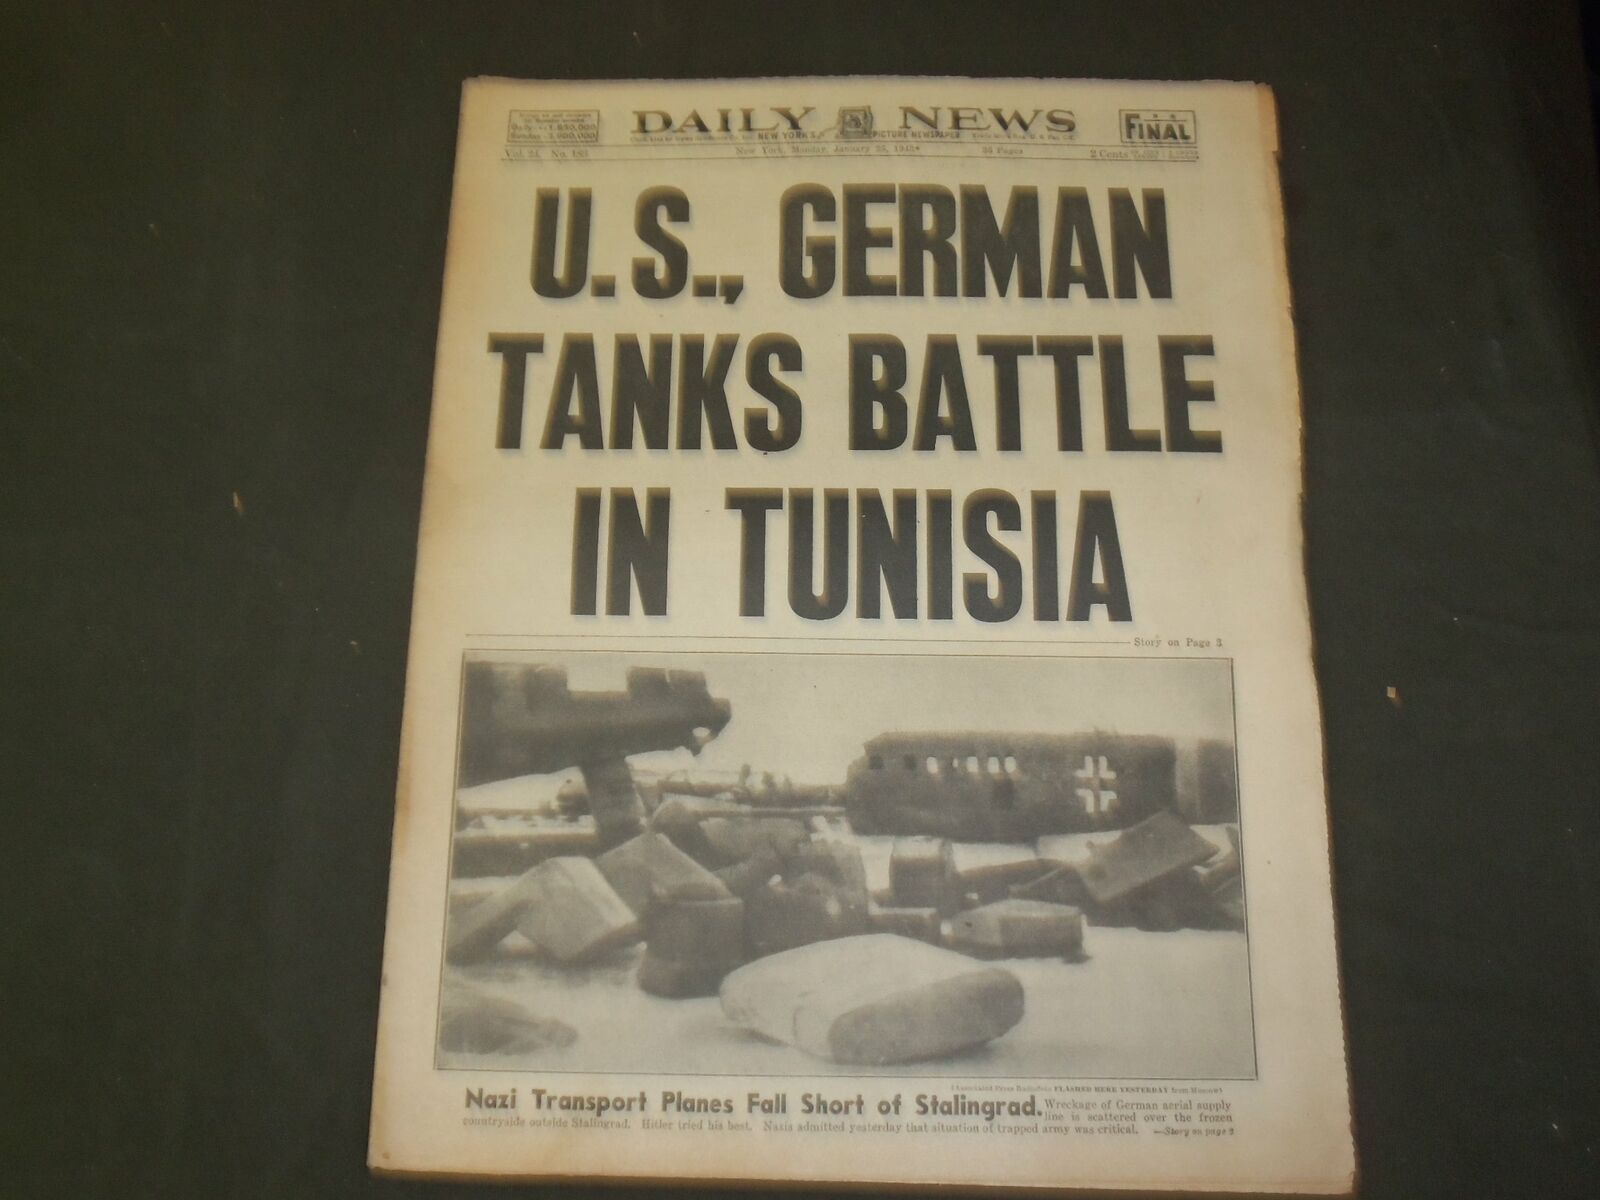 1943 JANUARY 25 NEW YORK DAILY NEWS-U.S., GERMAN TANKS BATTLE IN TUNISA- NP 4317